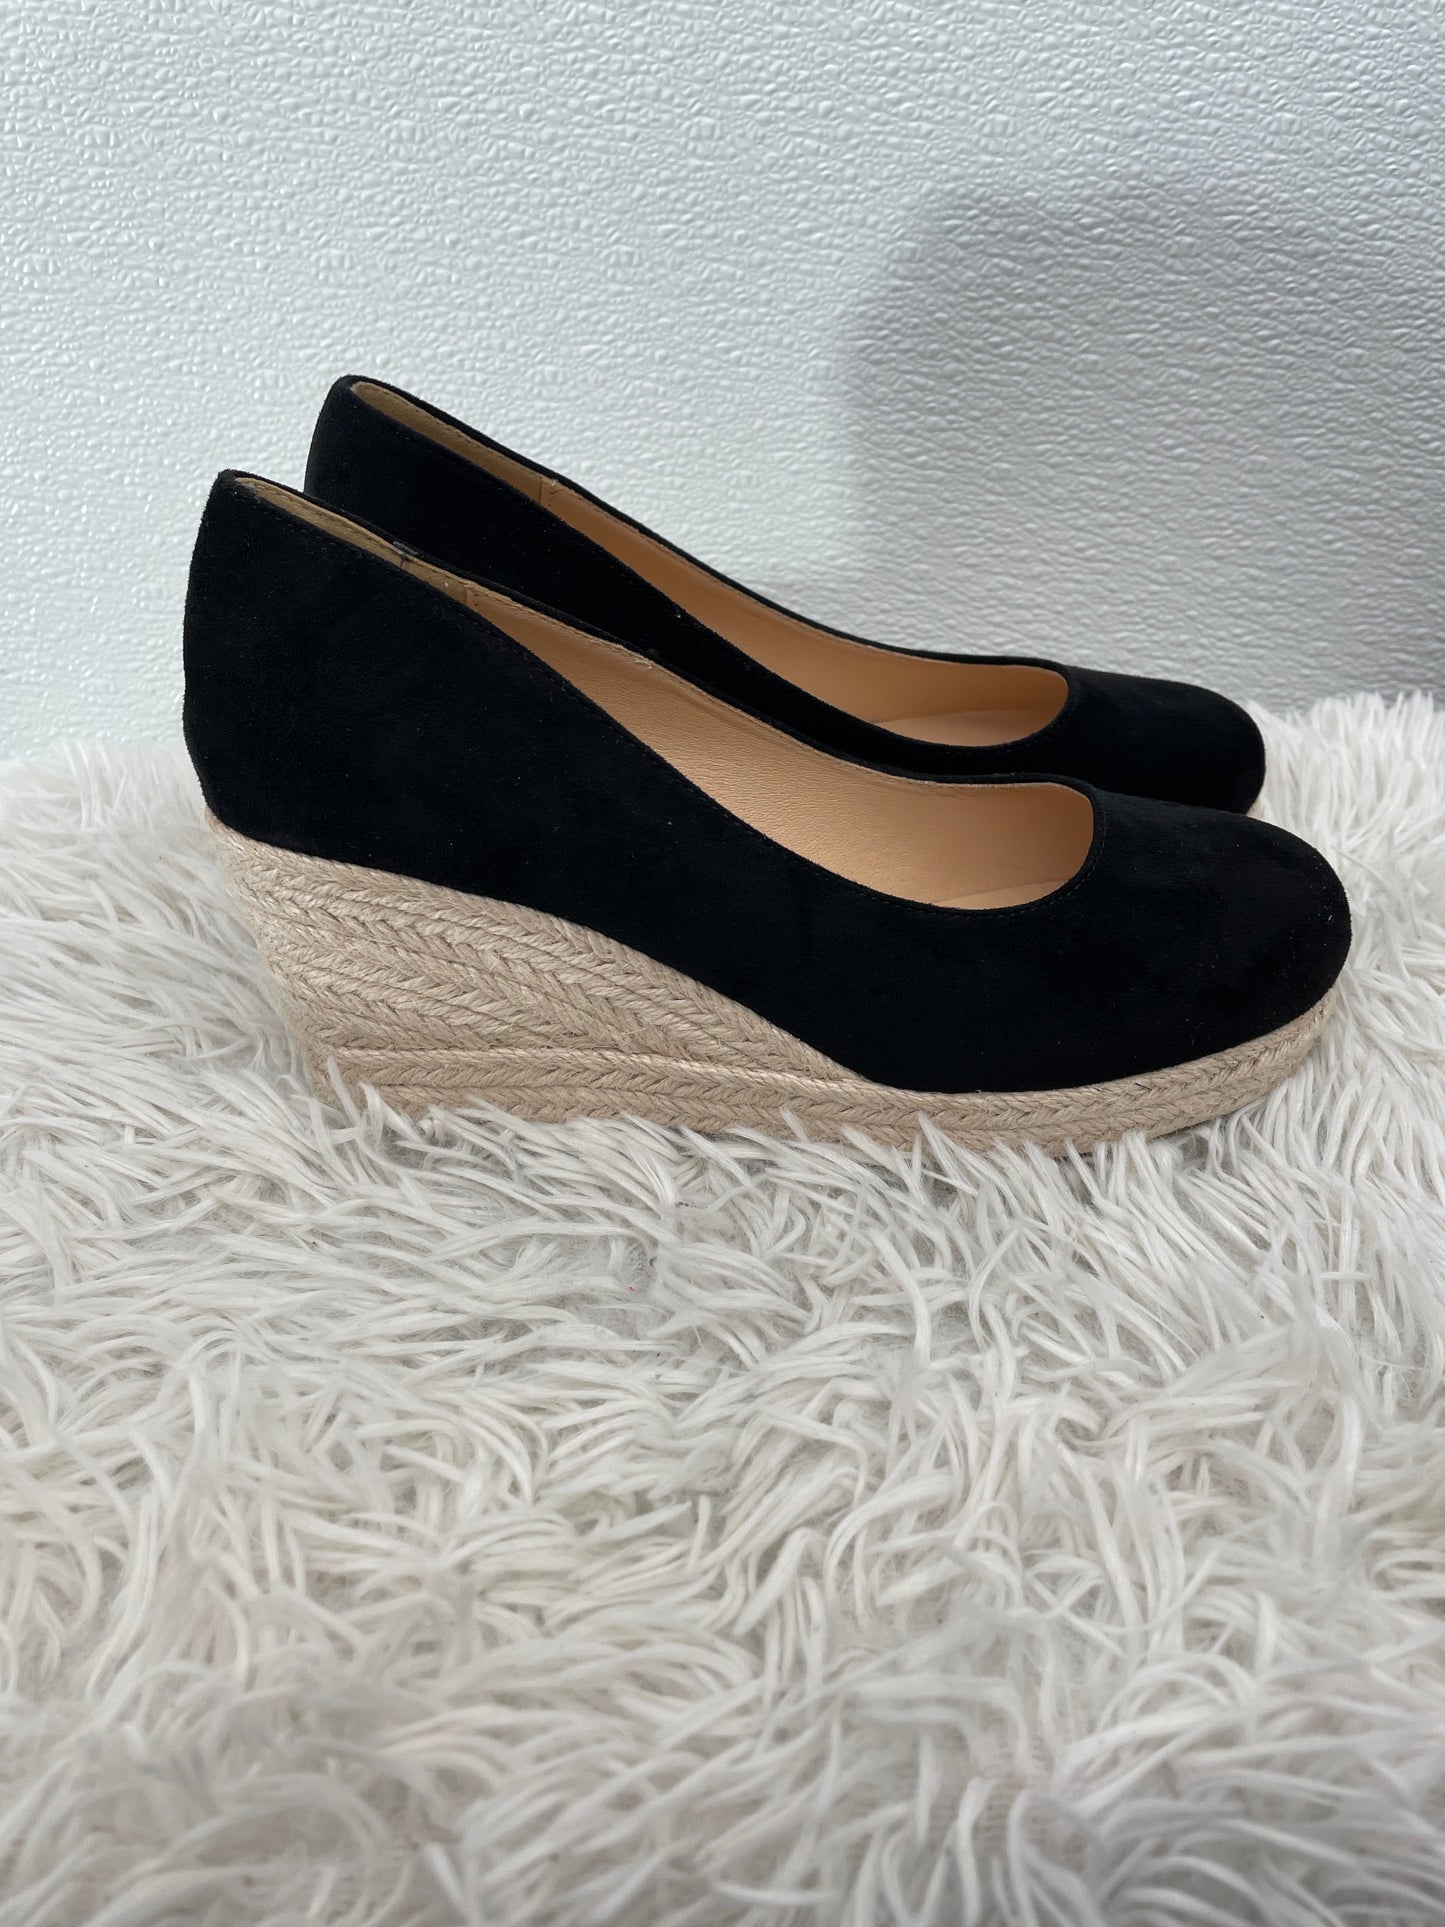 Black Shoes Heels Espadrille Wedge Clothes Mentor, Size 7.5